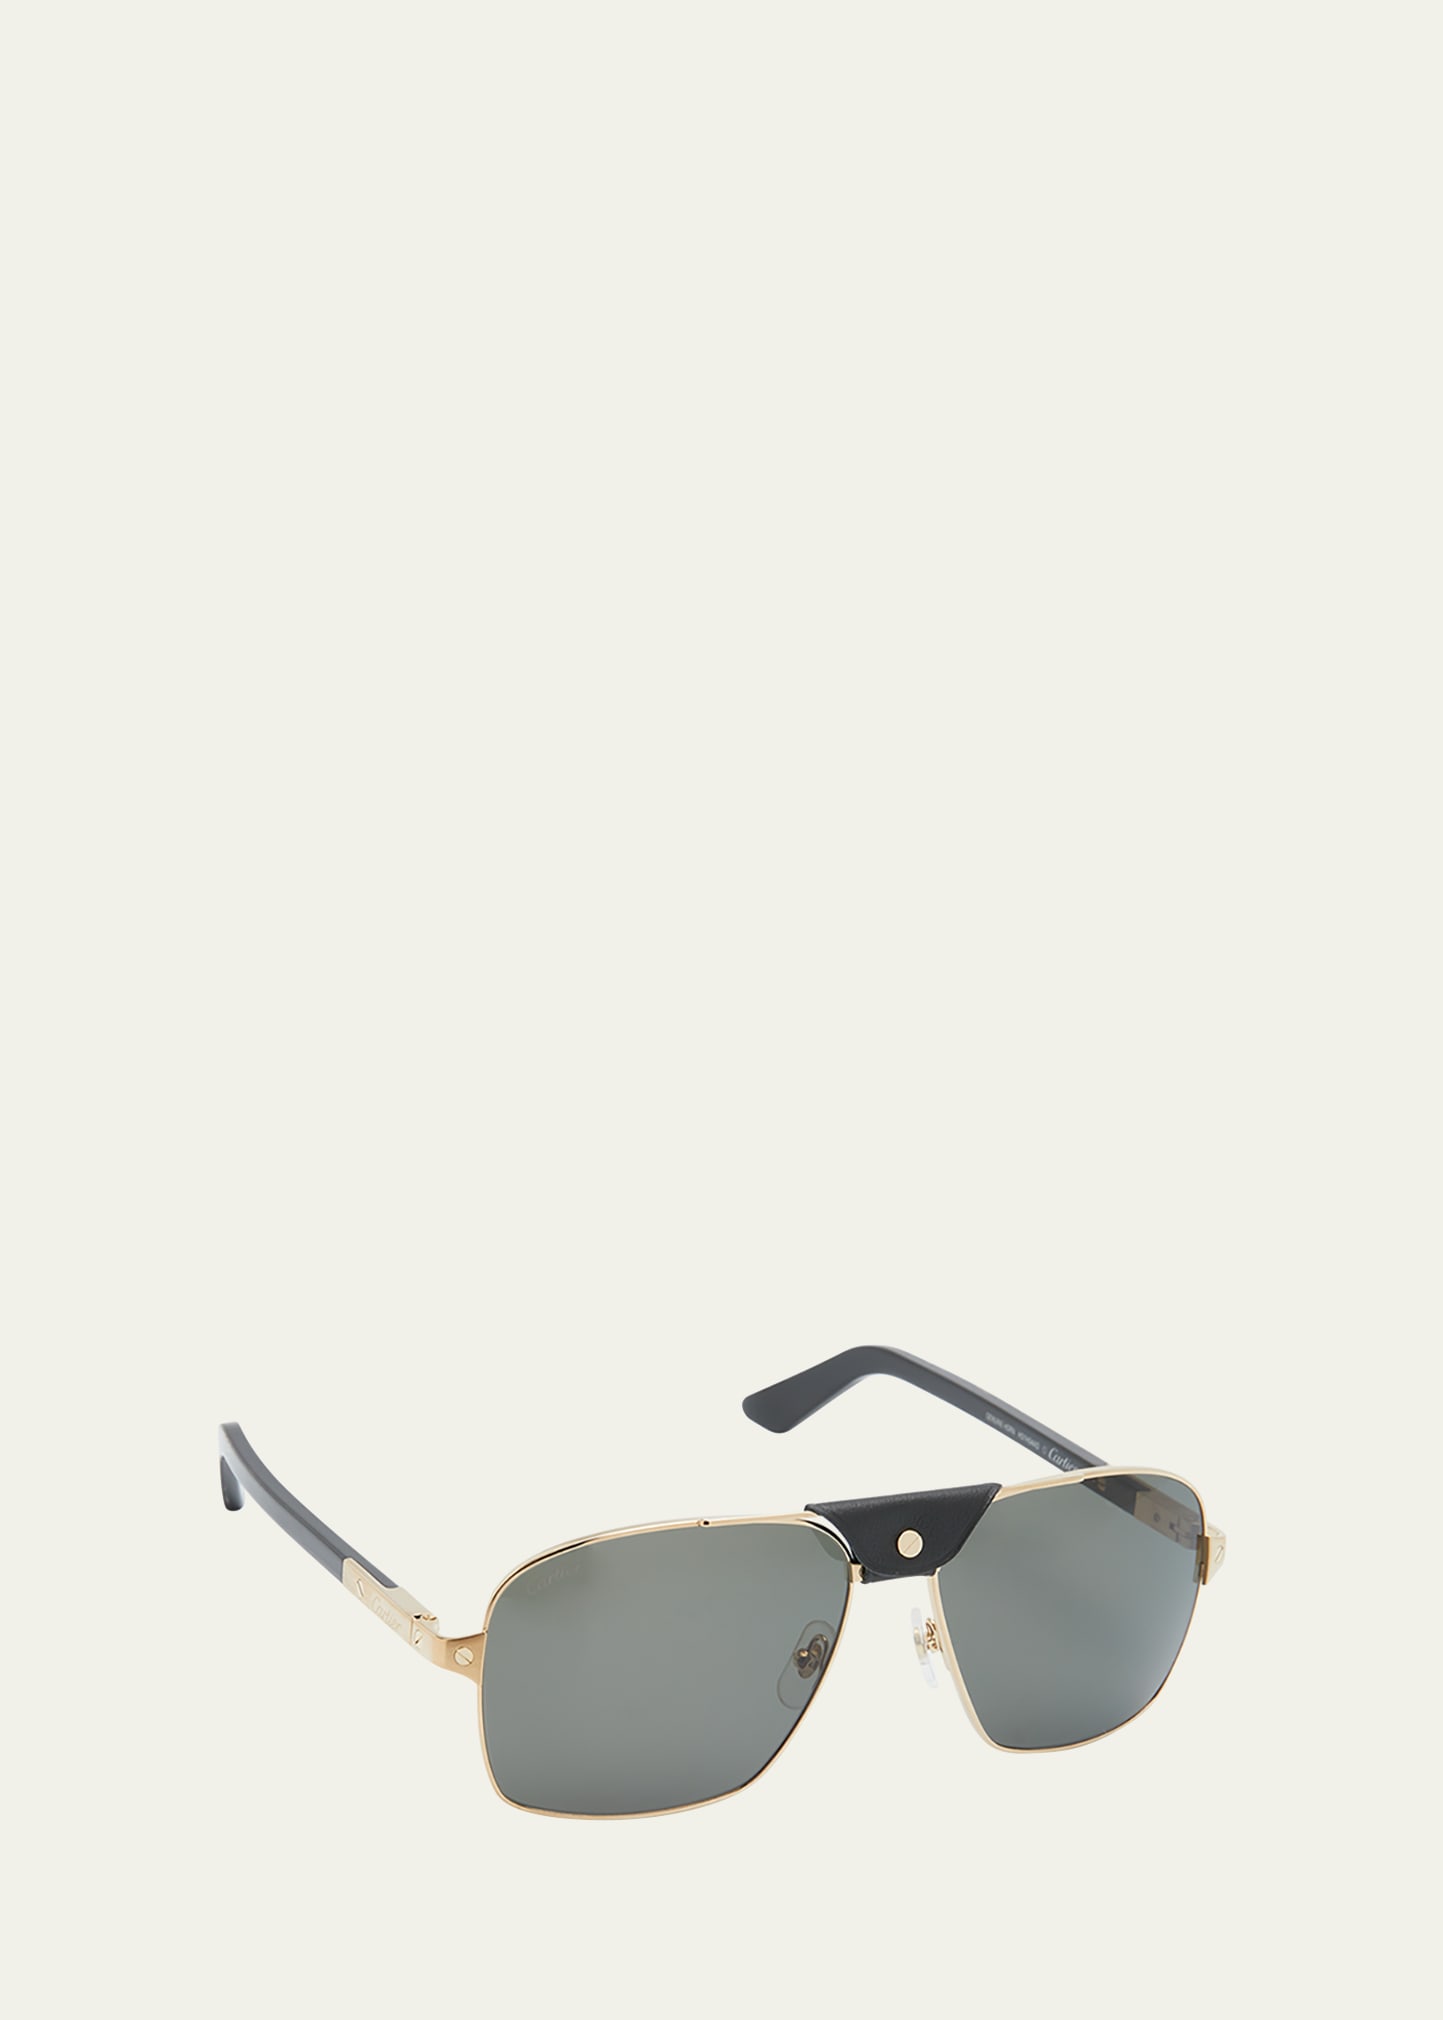 Men's Double-Bridge Aviator Sunglasses with Leather Cover